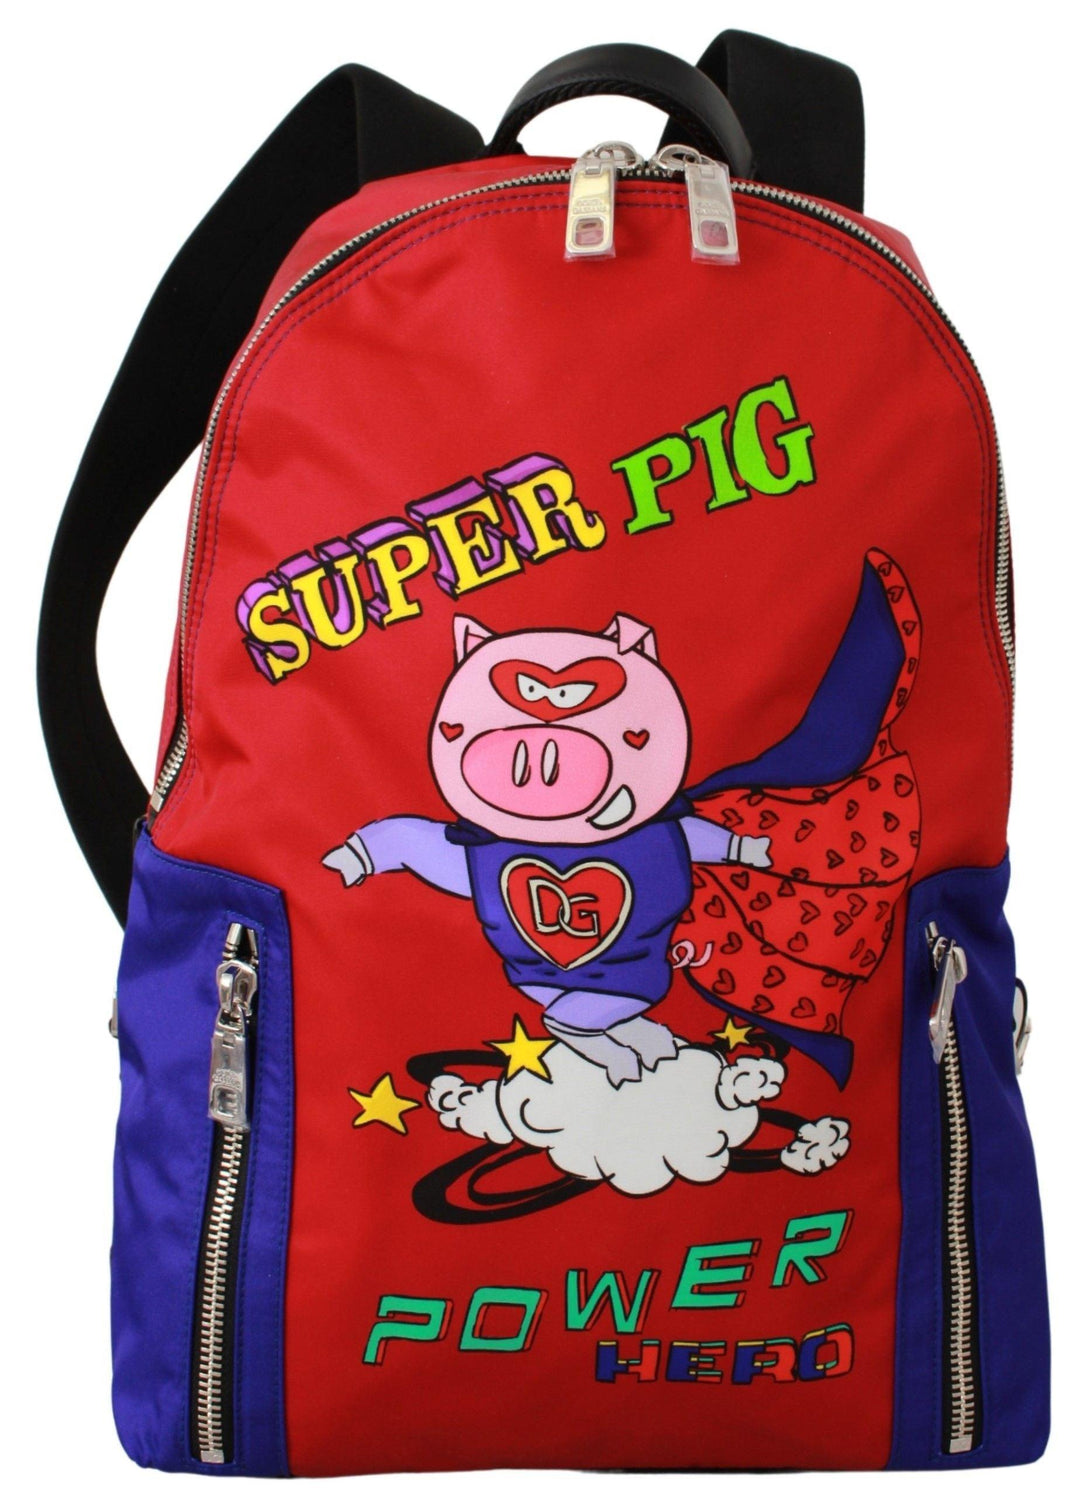 Dolce & Gabbana Nylon Multicolor Super Pig Print Men School Bag - Ellie Belle